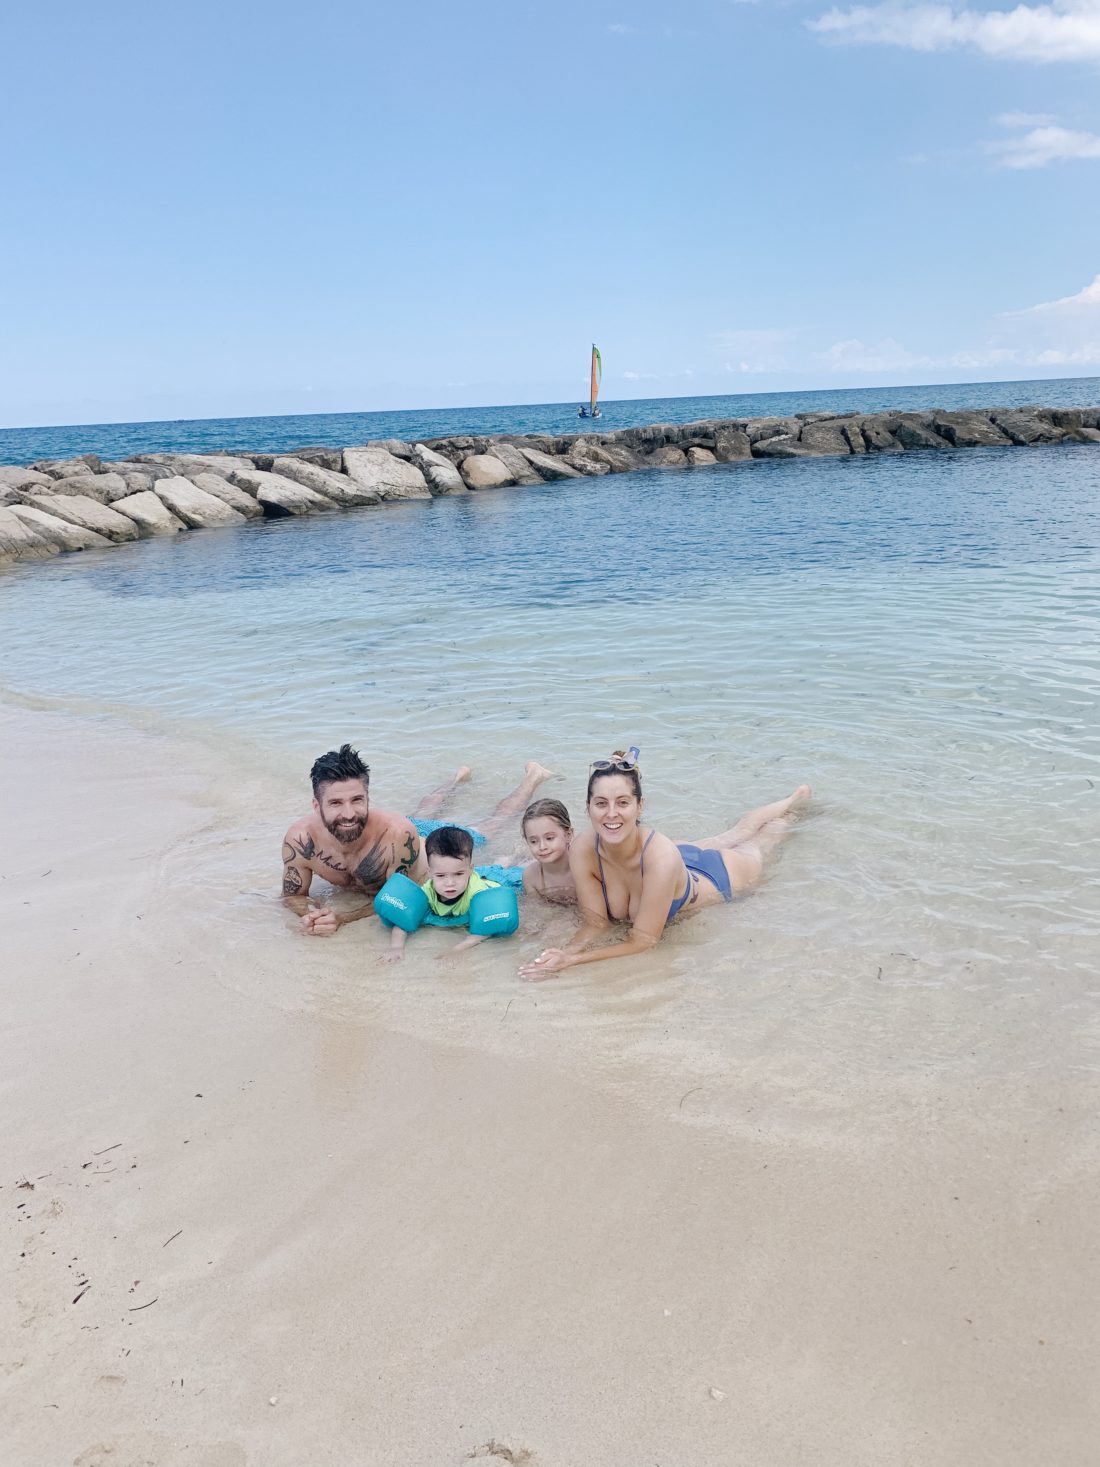 Eva Amurri Martino poses with her family on a trip to Jamaica